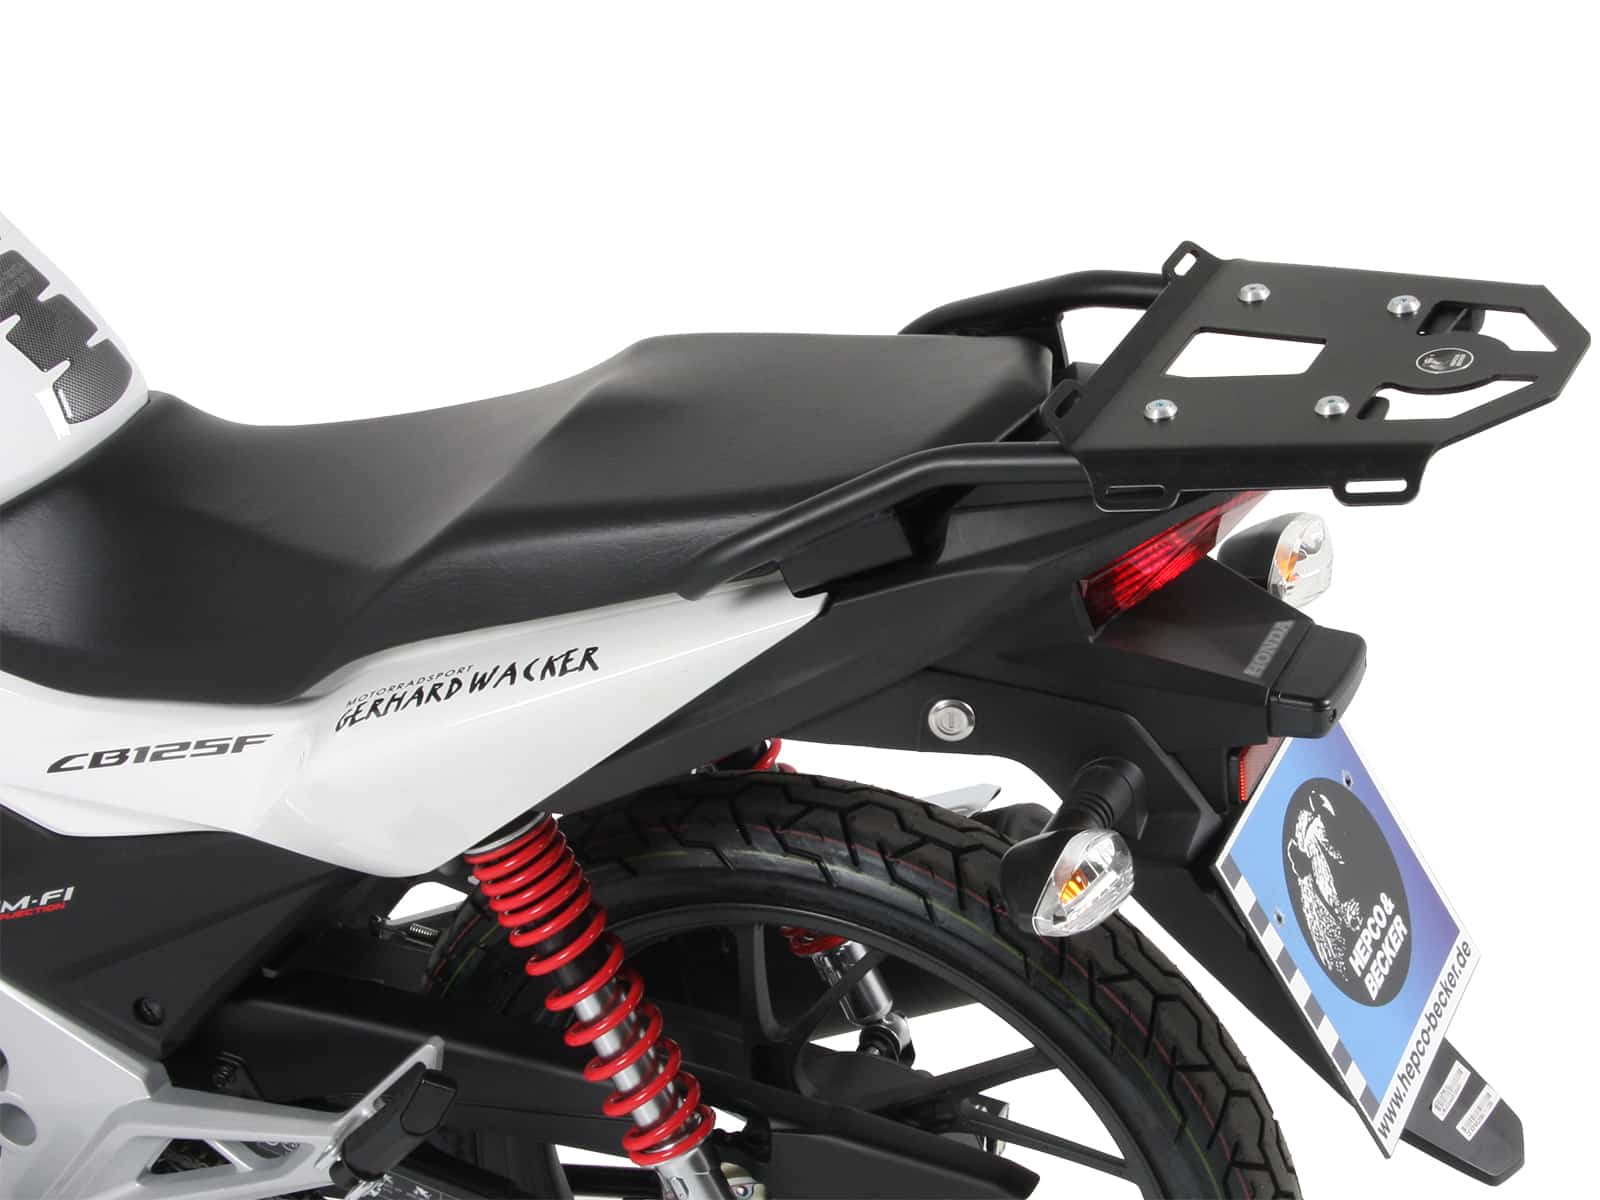 Minirack soft luggage rear rack for Honda CB 125 F (2015-2020)